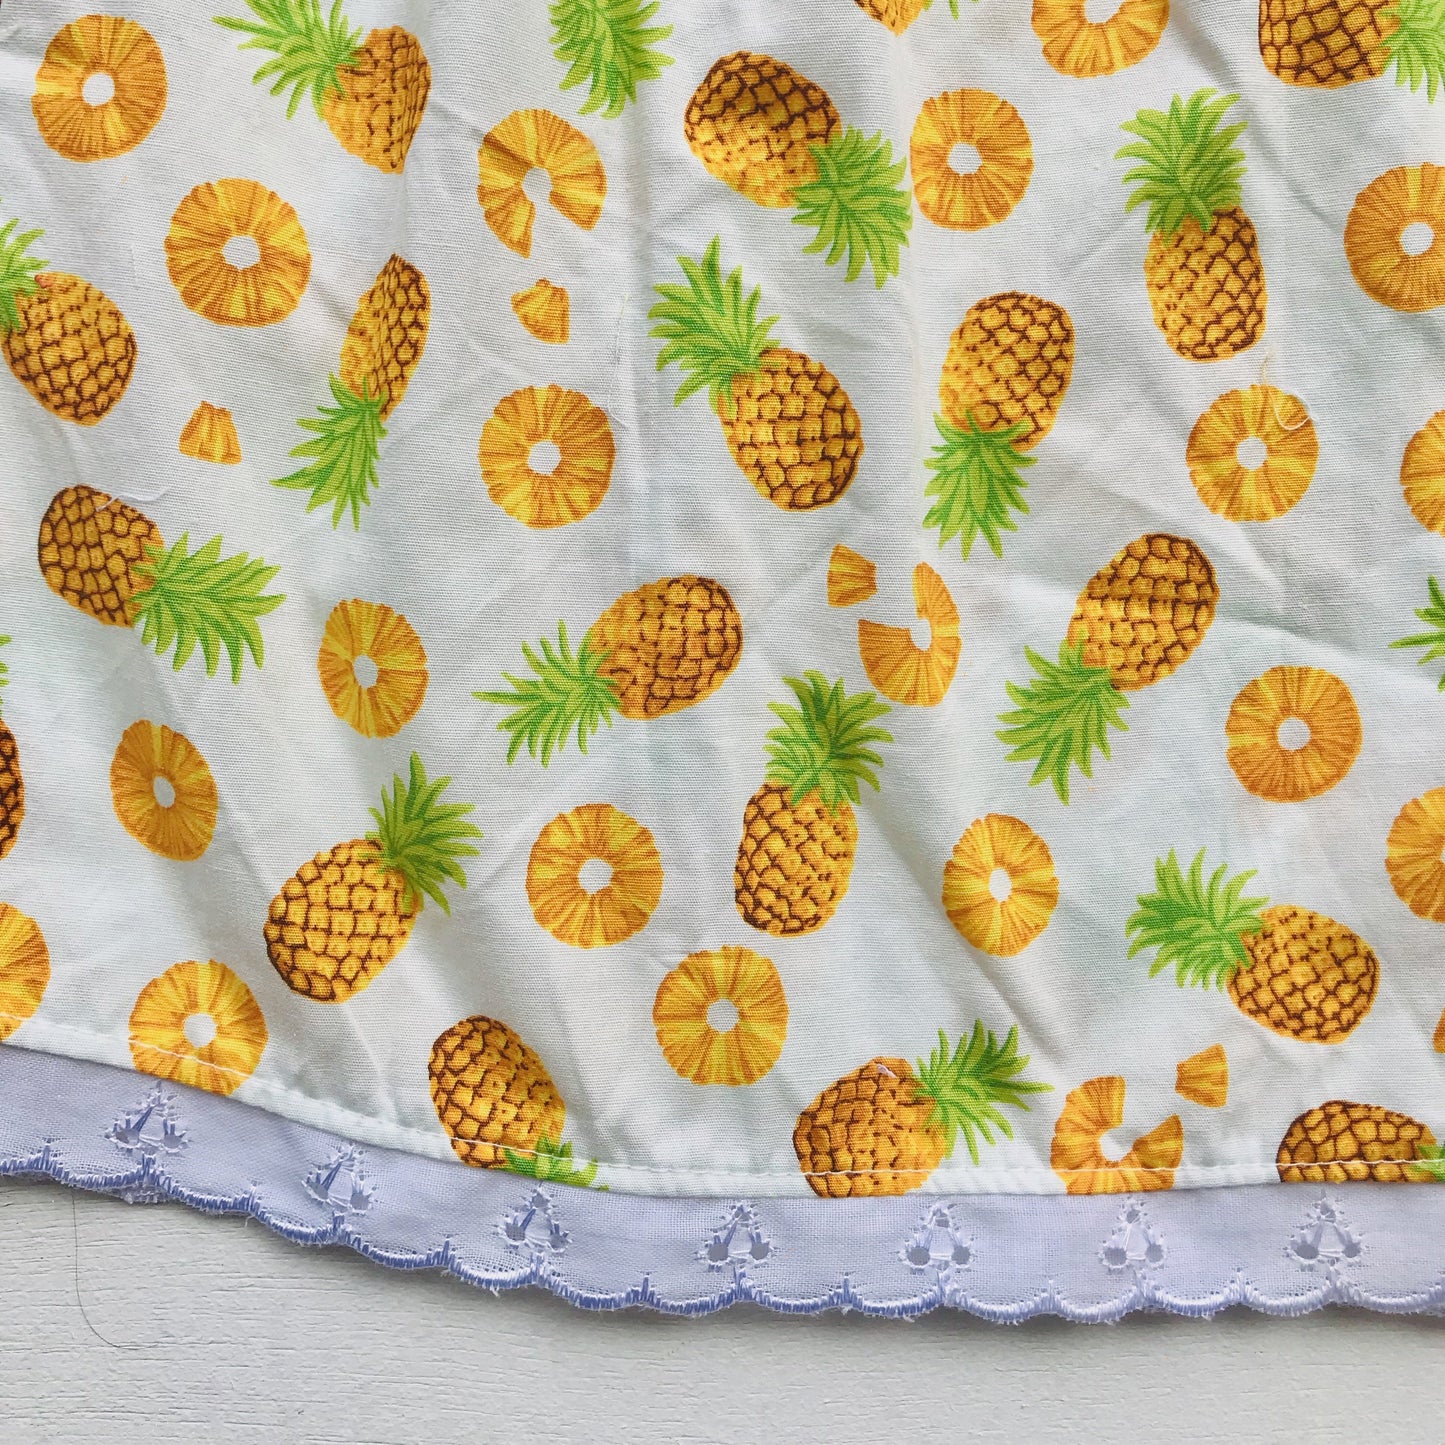 Peony Dress in Pineapple Slices Print - Lil' Tati